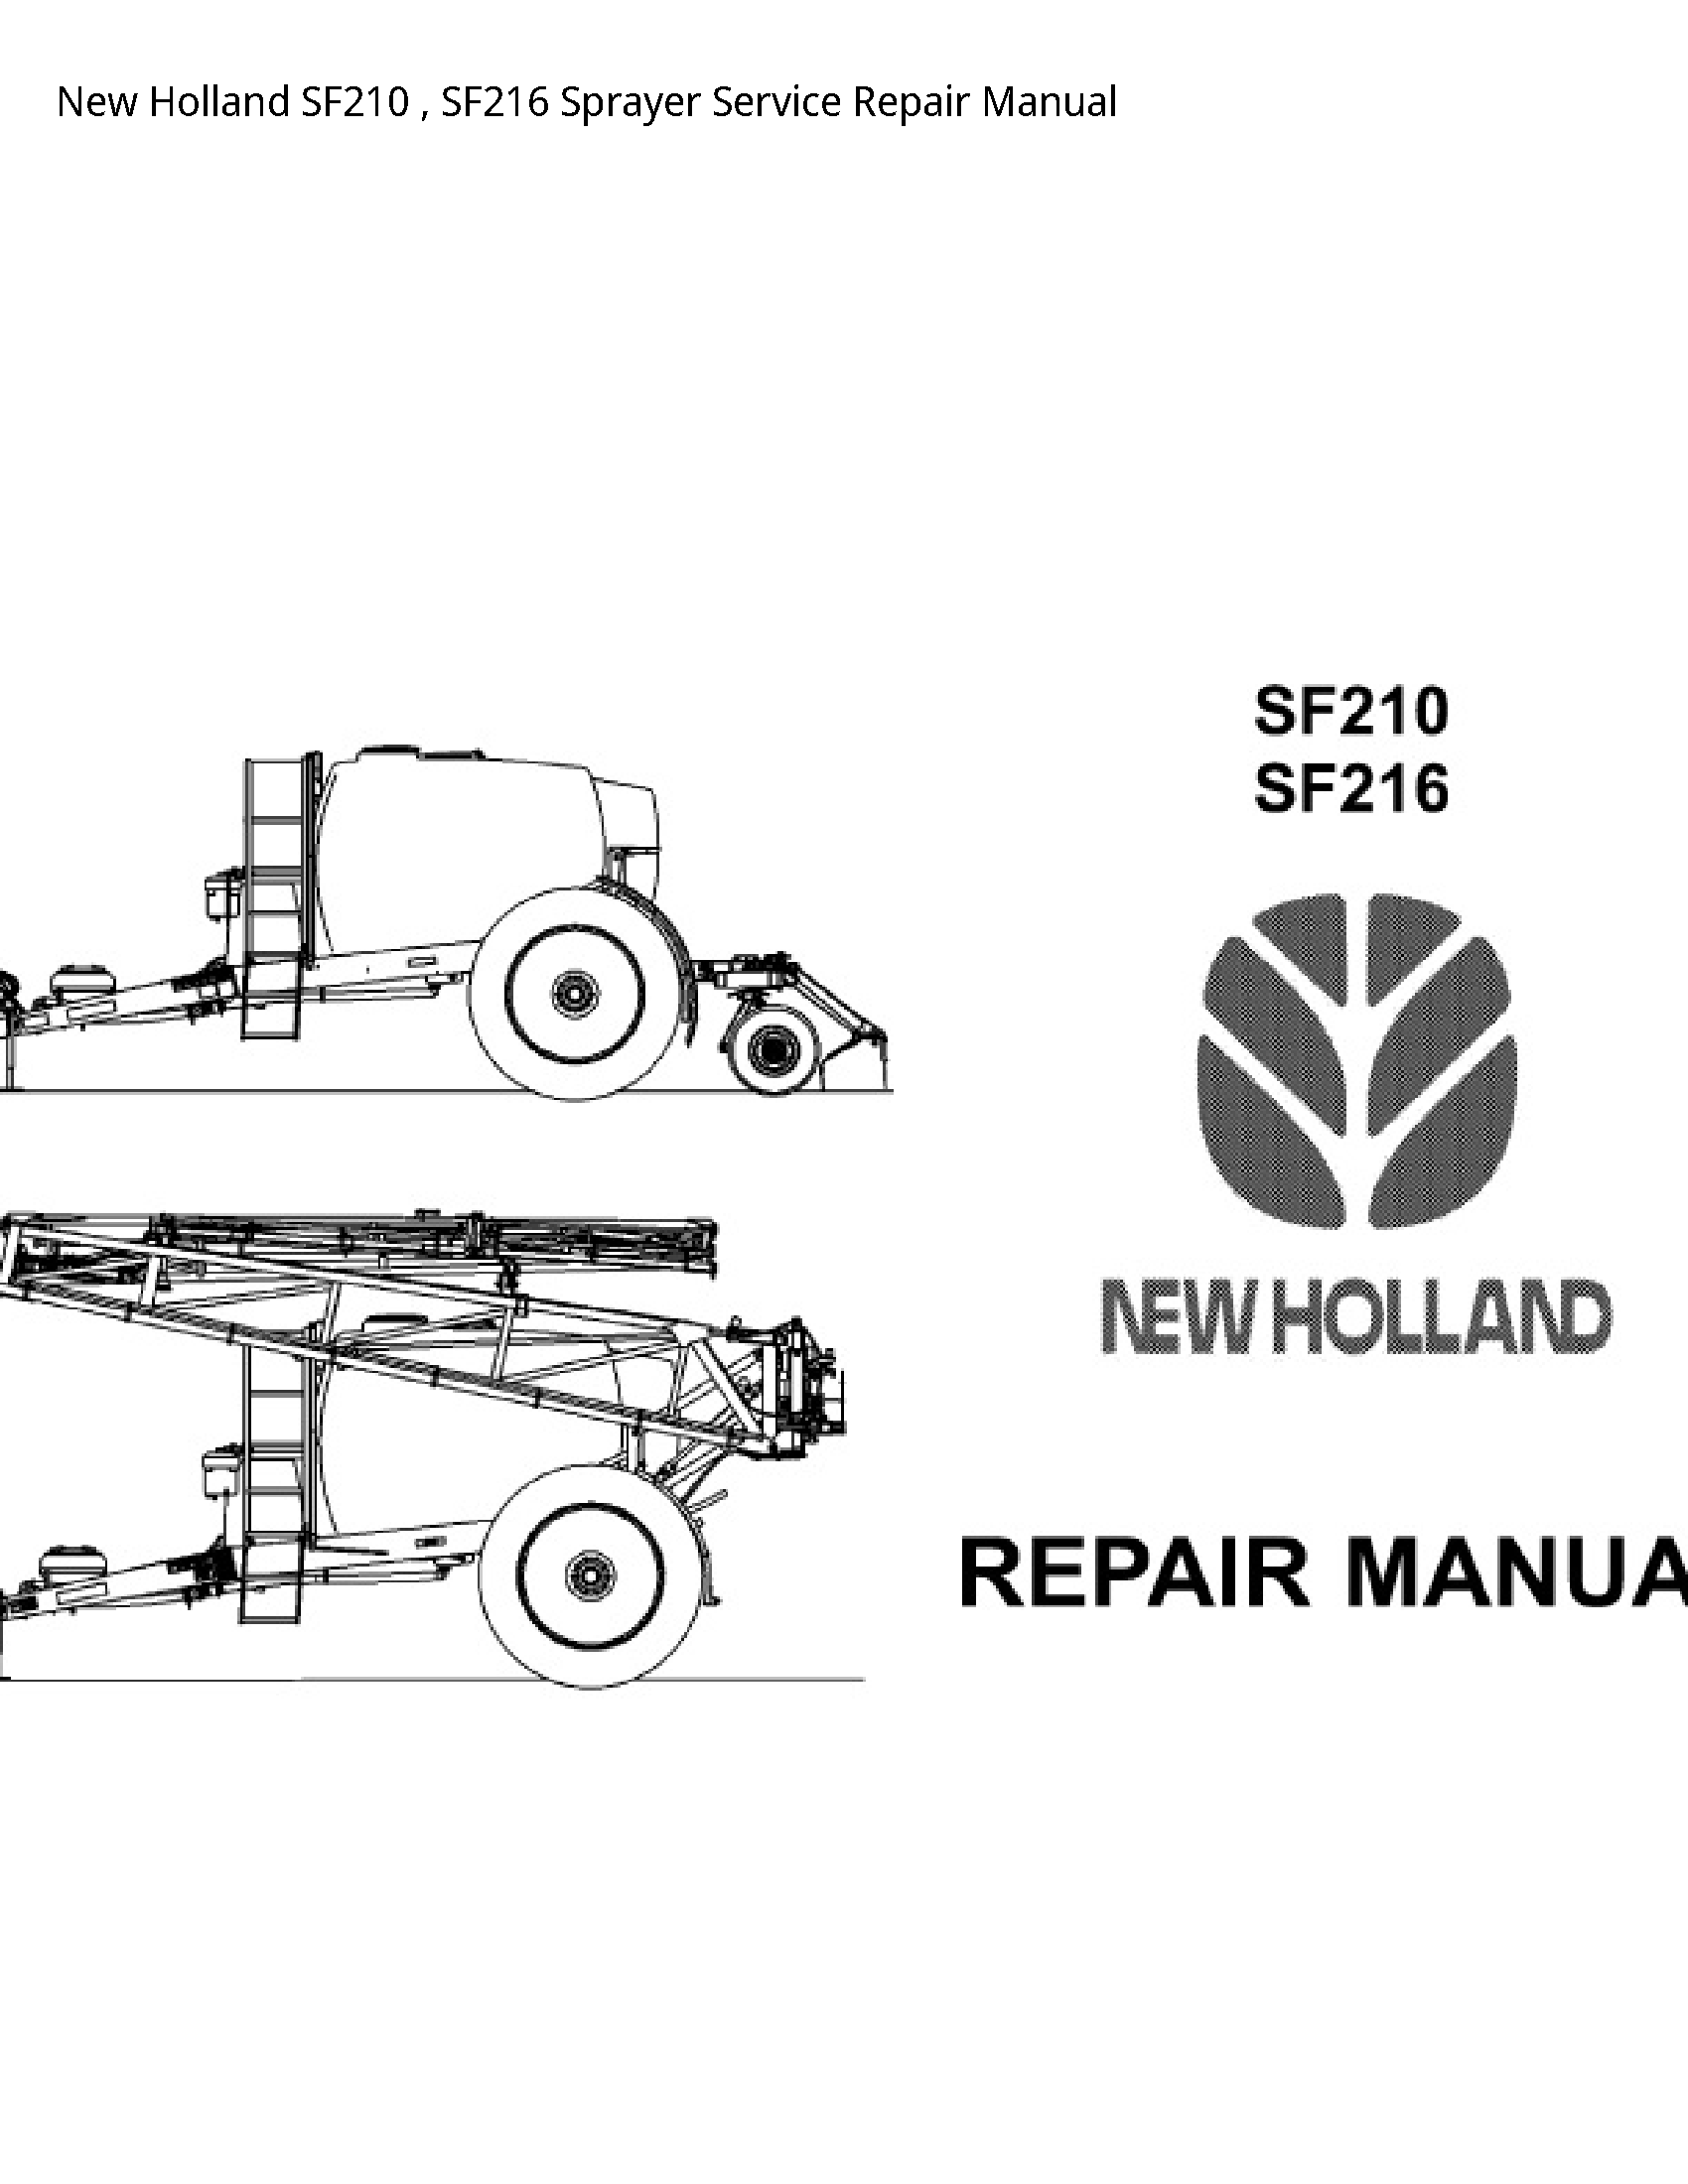 New Holland SF210 Sprayer manual